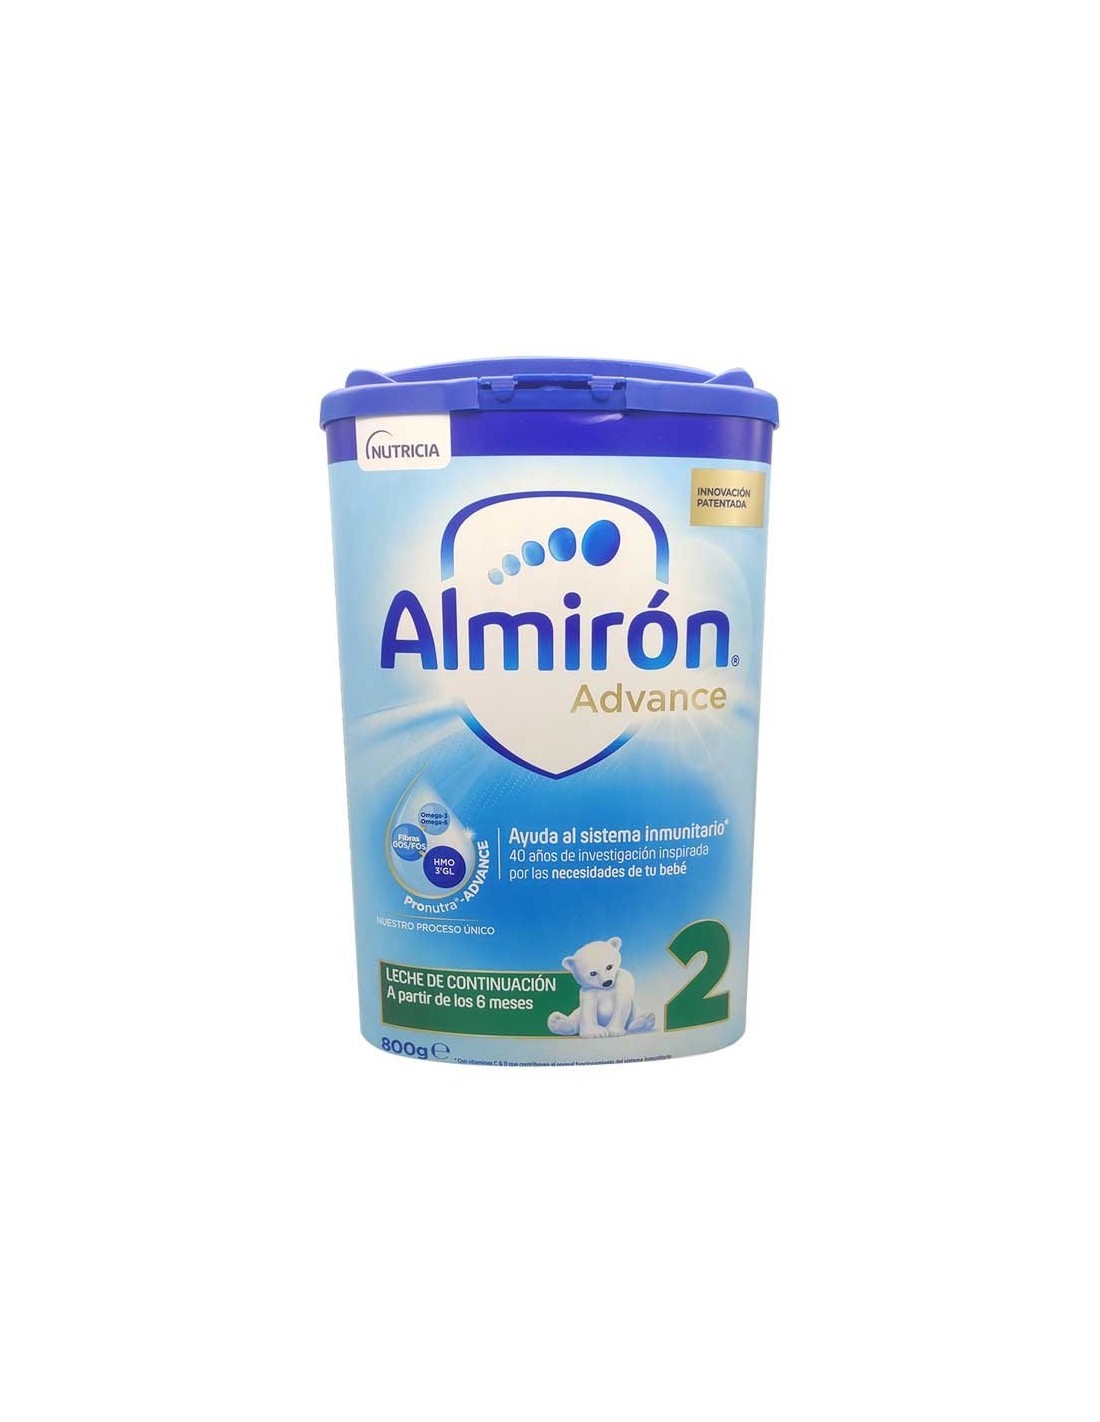 Almirón Advance Digest 2 - Almirón